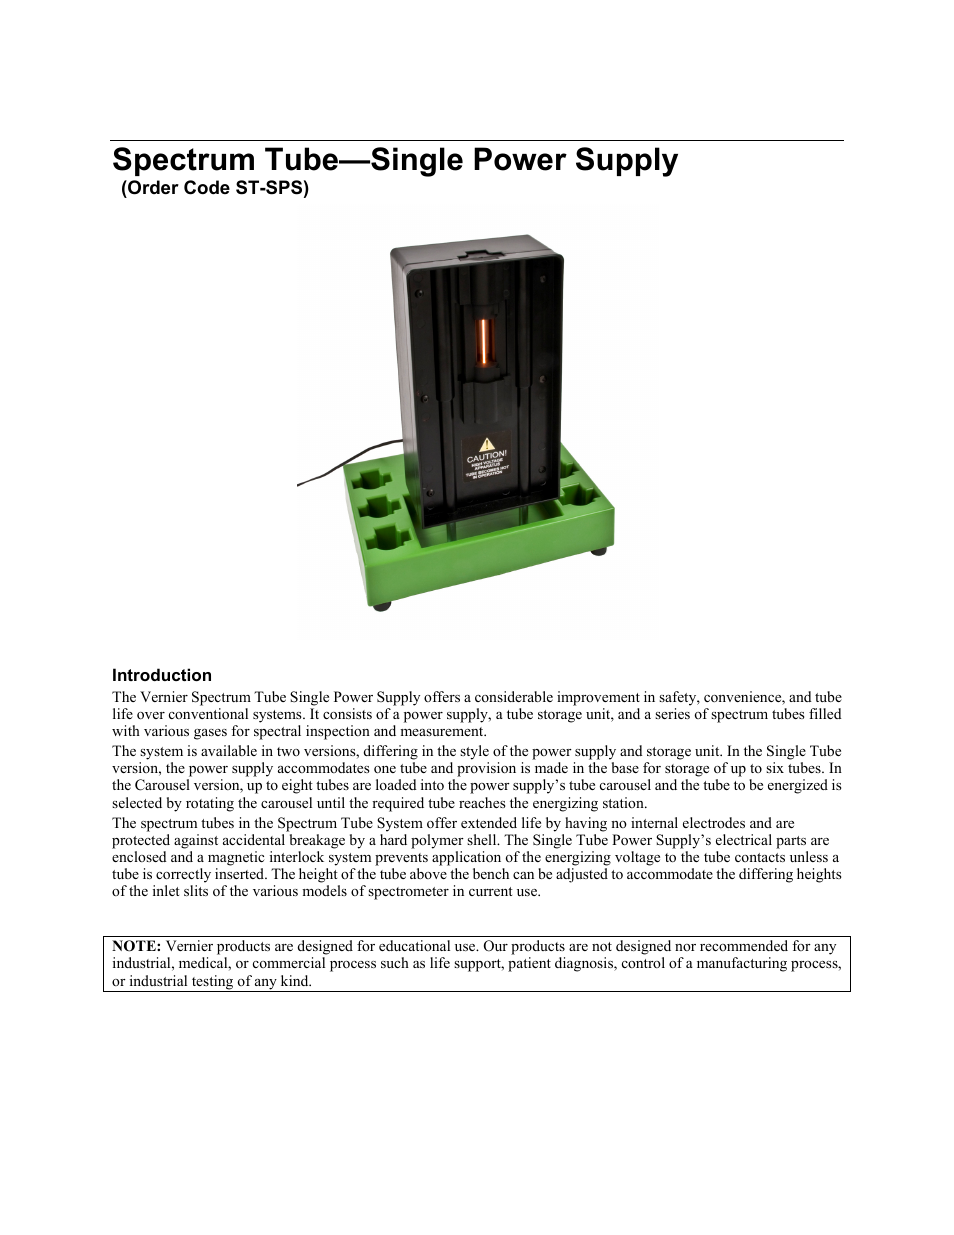 Spectrum Tube Single Power Supply